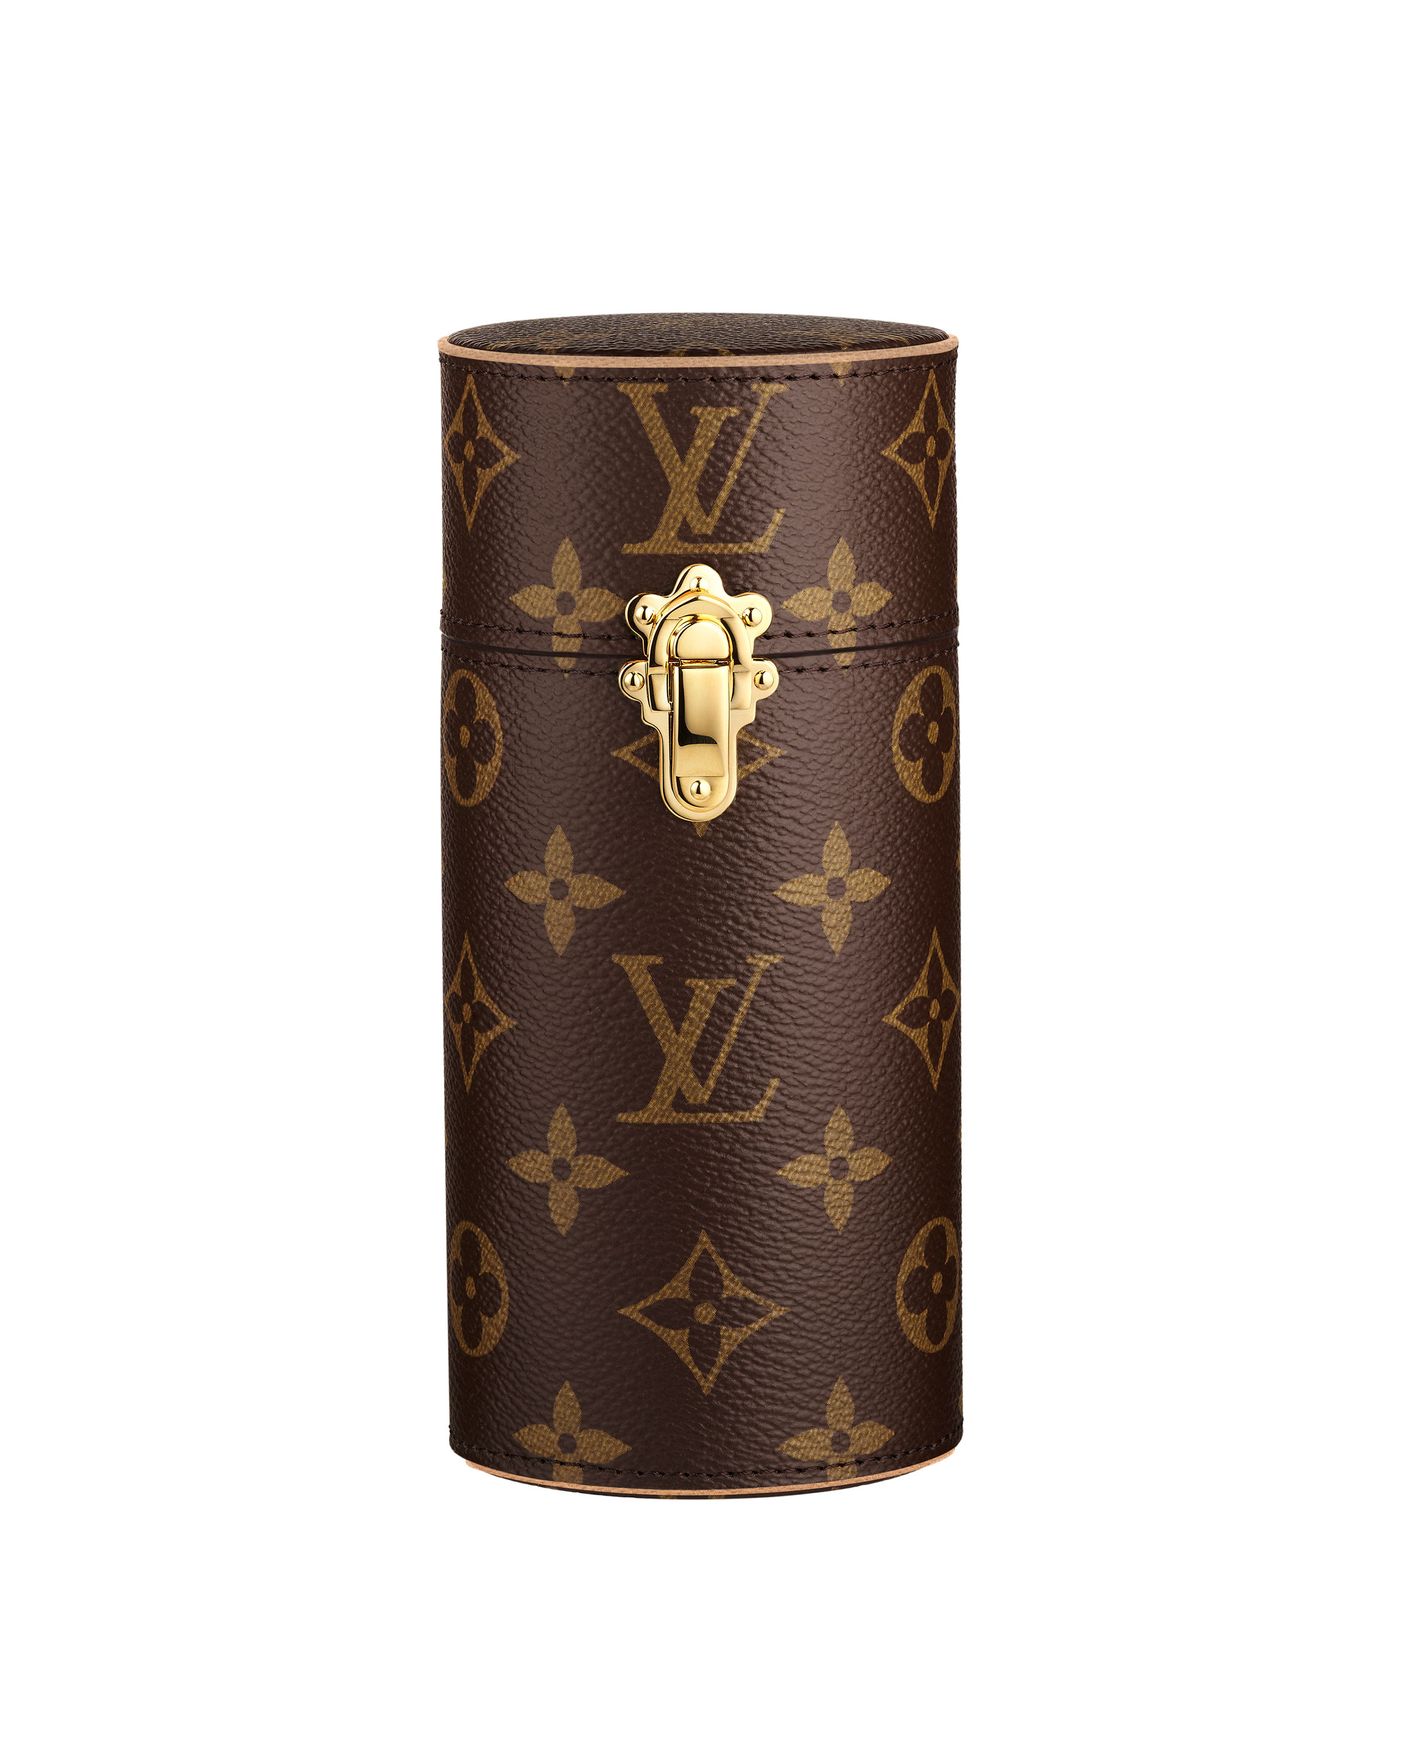 Louis Vuitton's First Fragrance Pop-Up in US - Elite Traveler